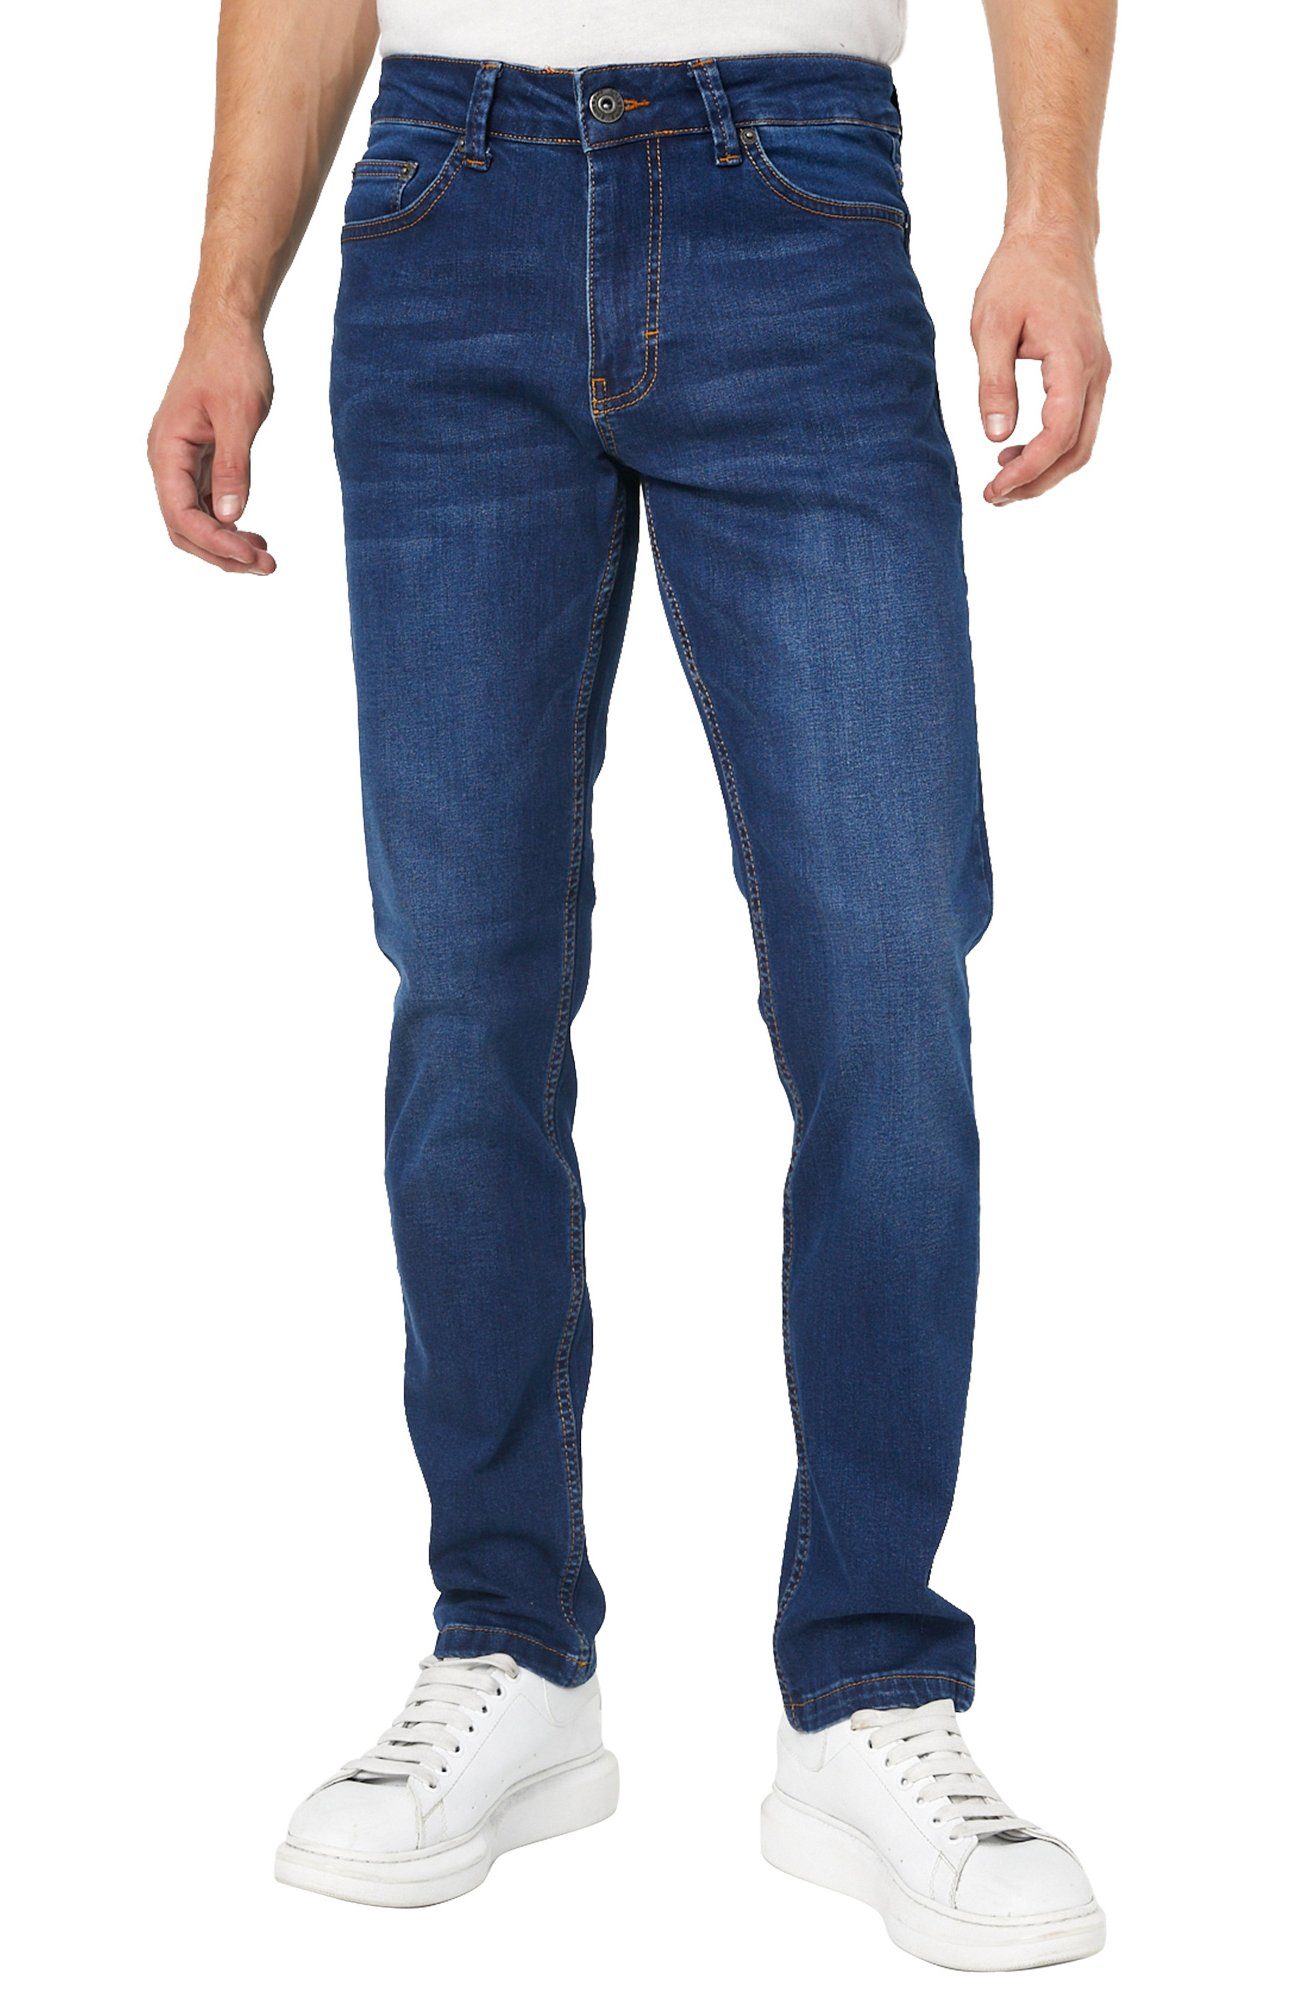 Smith & Solo Stretch-Jeans »Jeans Herren - Slim Fit Jeanshose, Hosen  Stretch Modern Männer Straight Hose Cut Basic Washed« 5-Pocket Design, Schmale  Jeans, in tollem Design, Slimfit, in toller Passform online kaufen